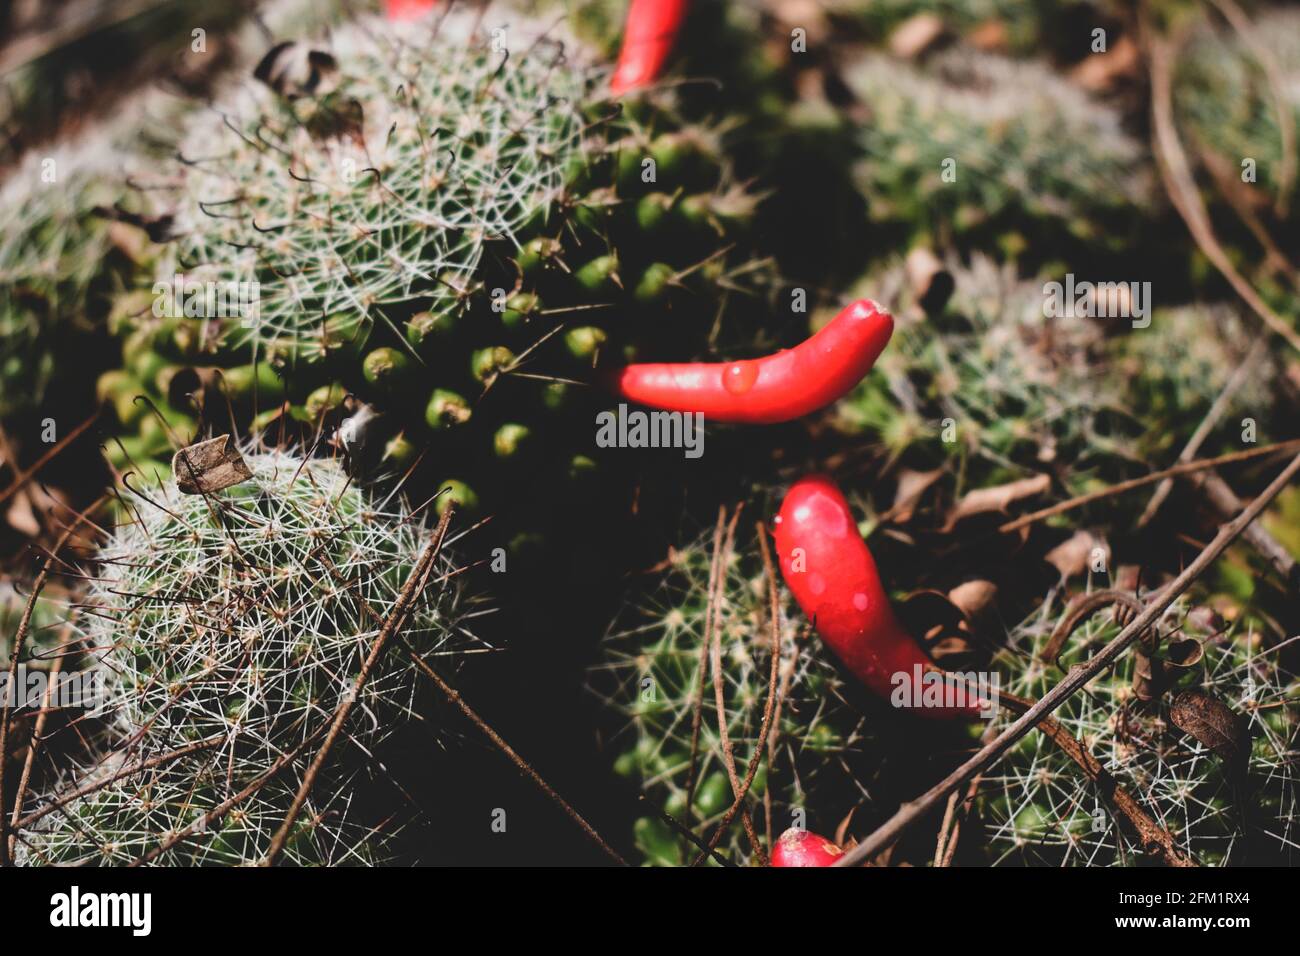 Kaktuspflanze in einem Topf Stock Fotografie Stockfoto